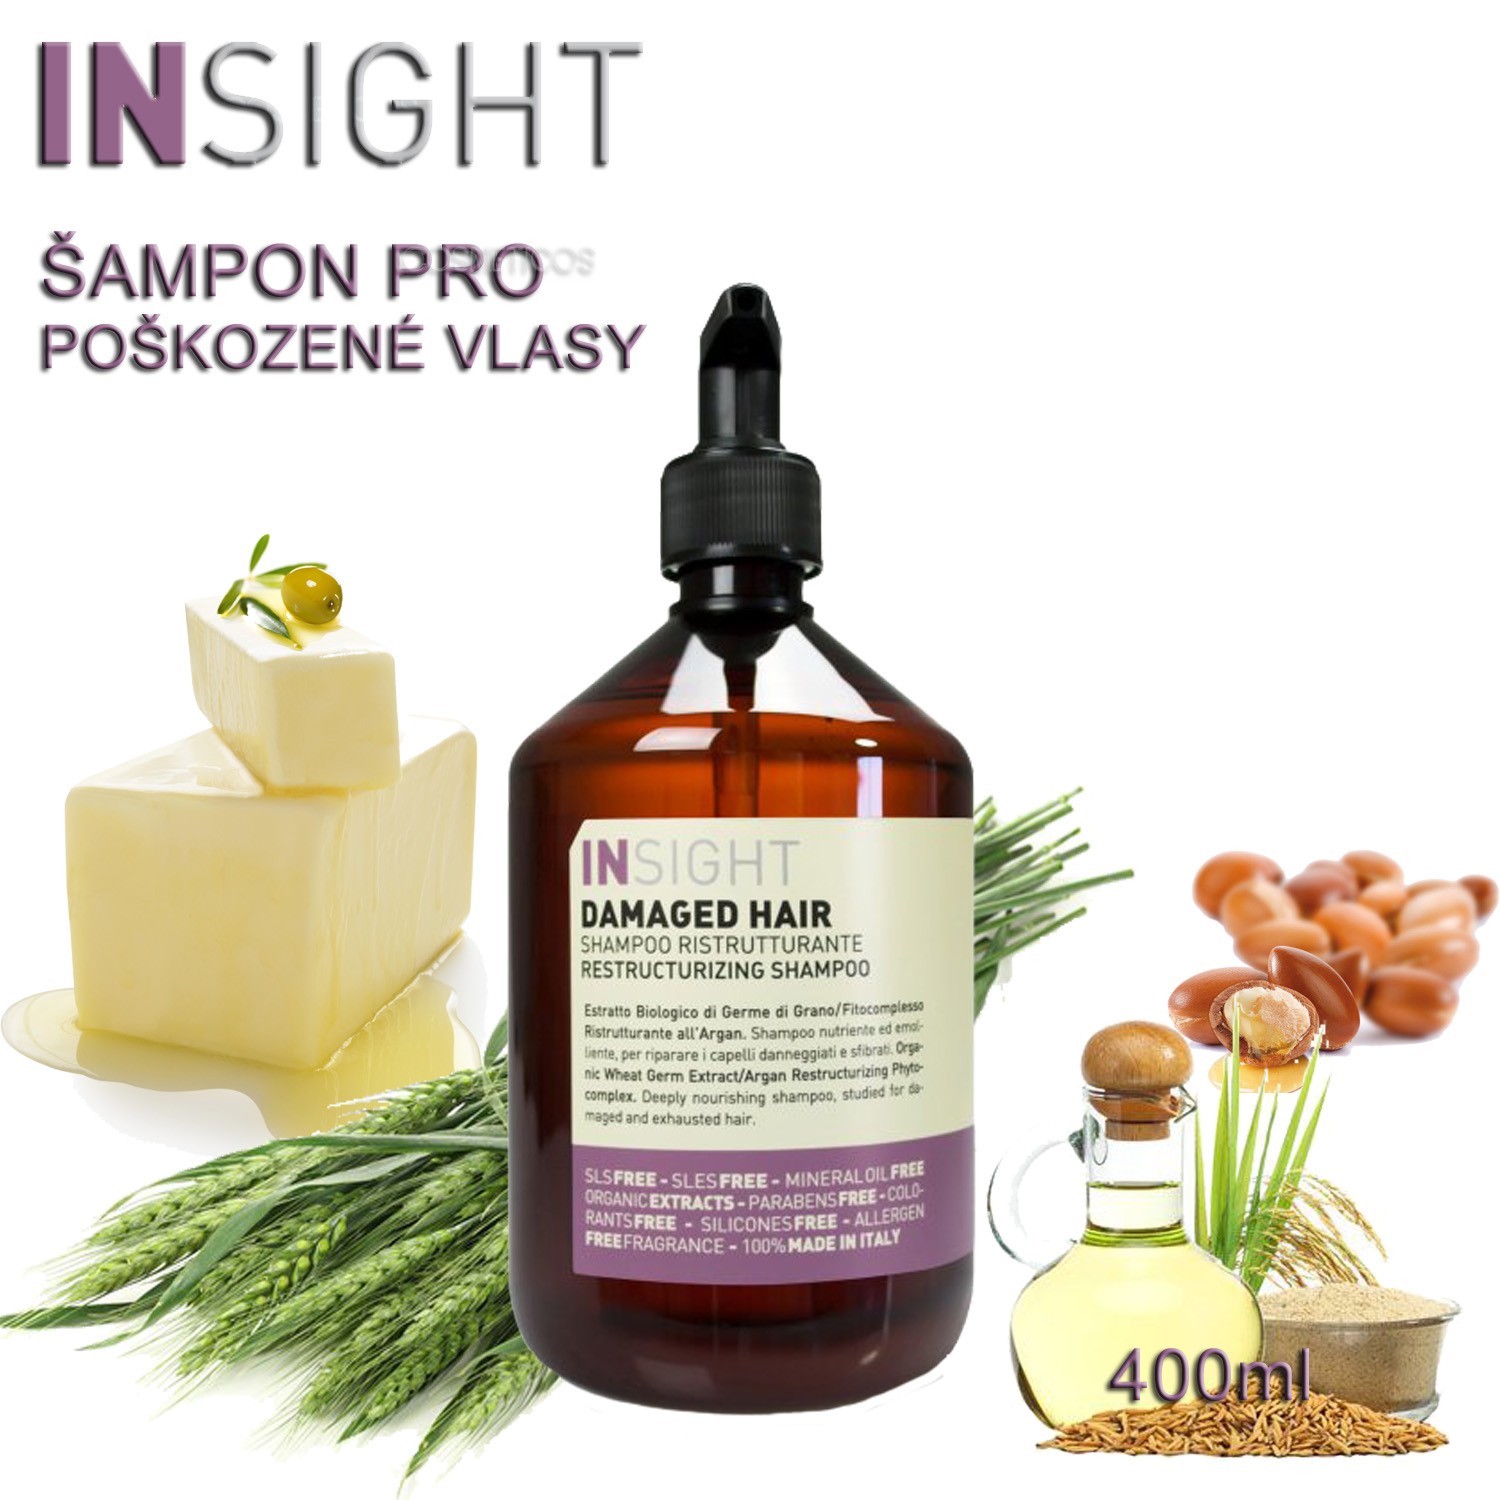 insight szampon demadge hair